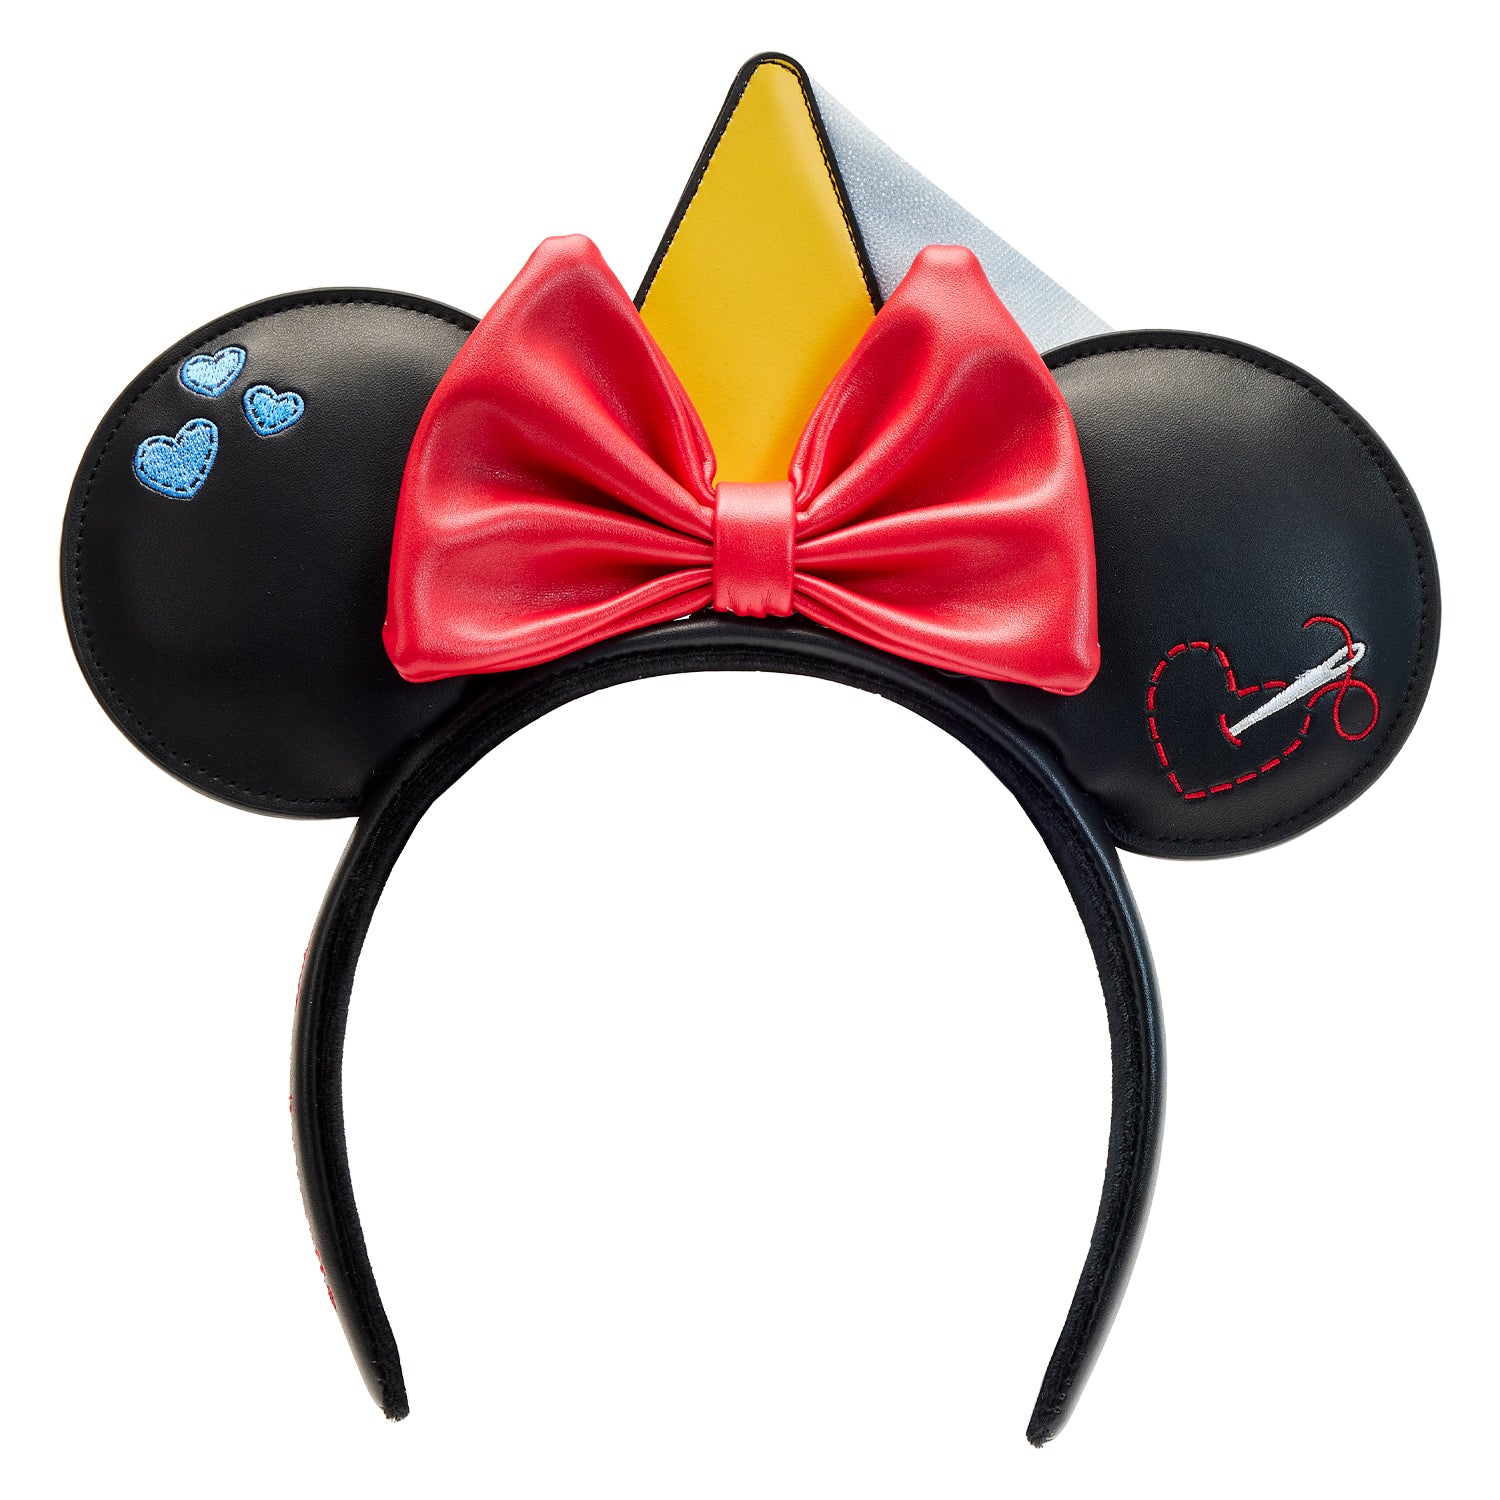 LF Disney Brave Little Tailor Minnie Ears Headband